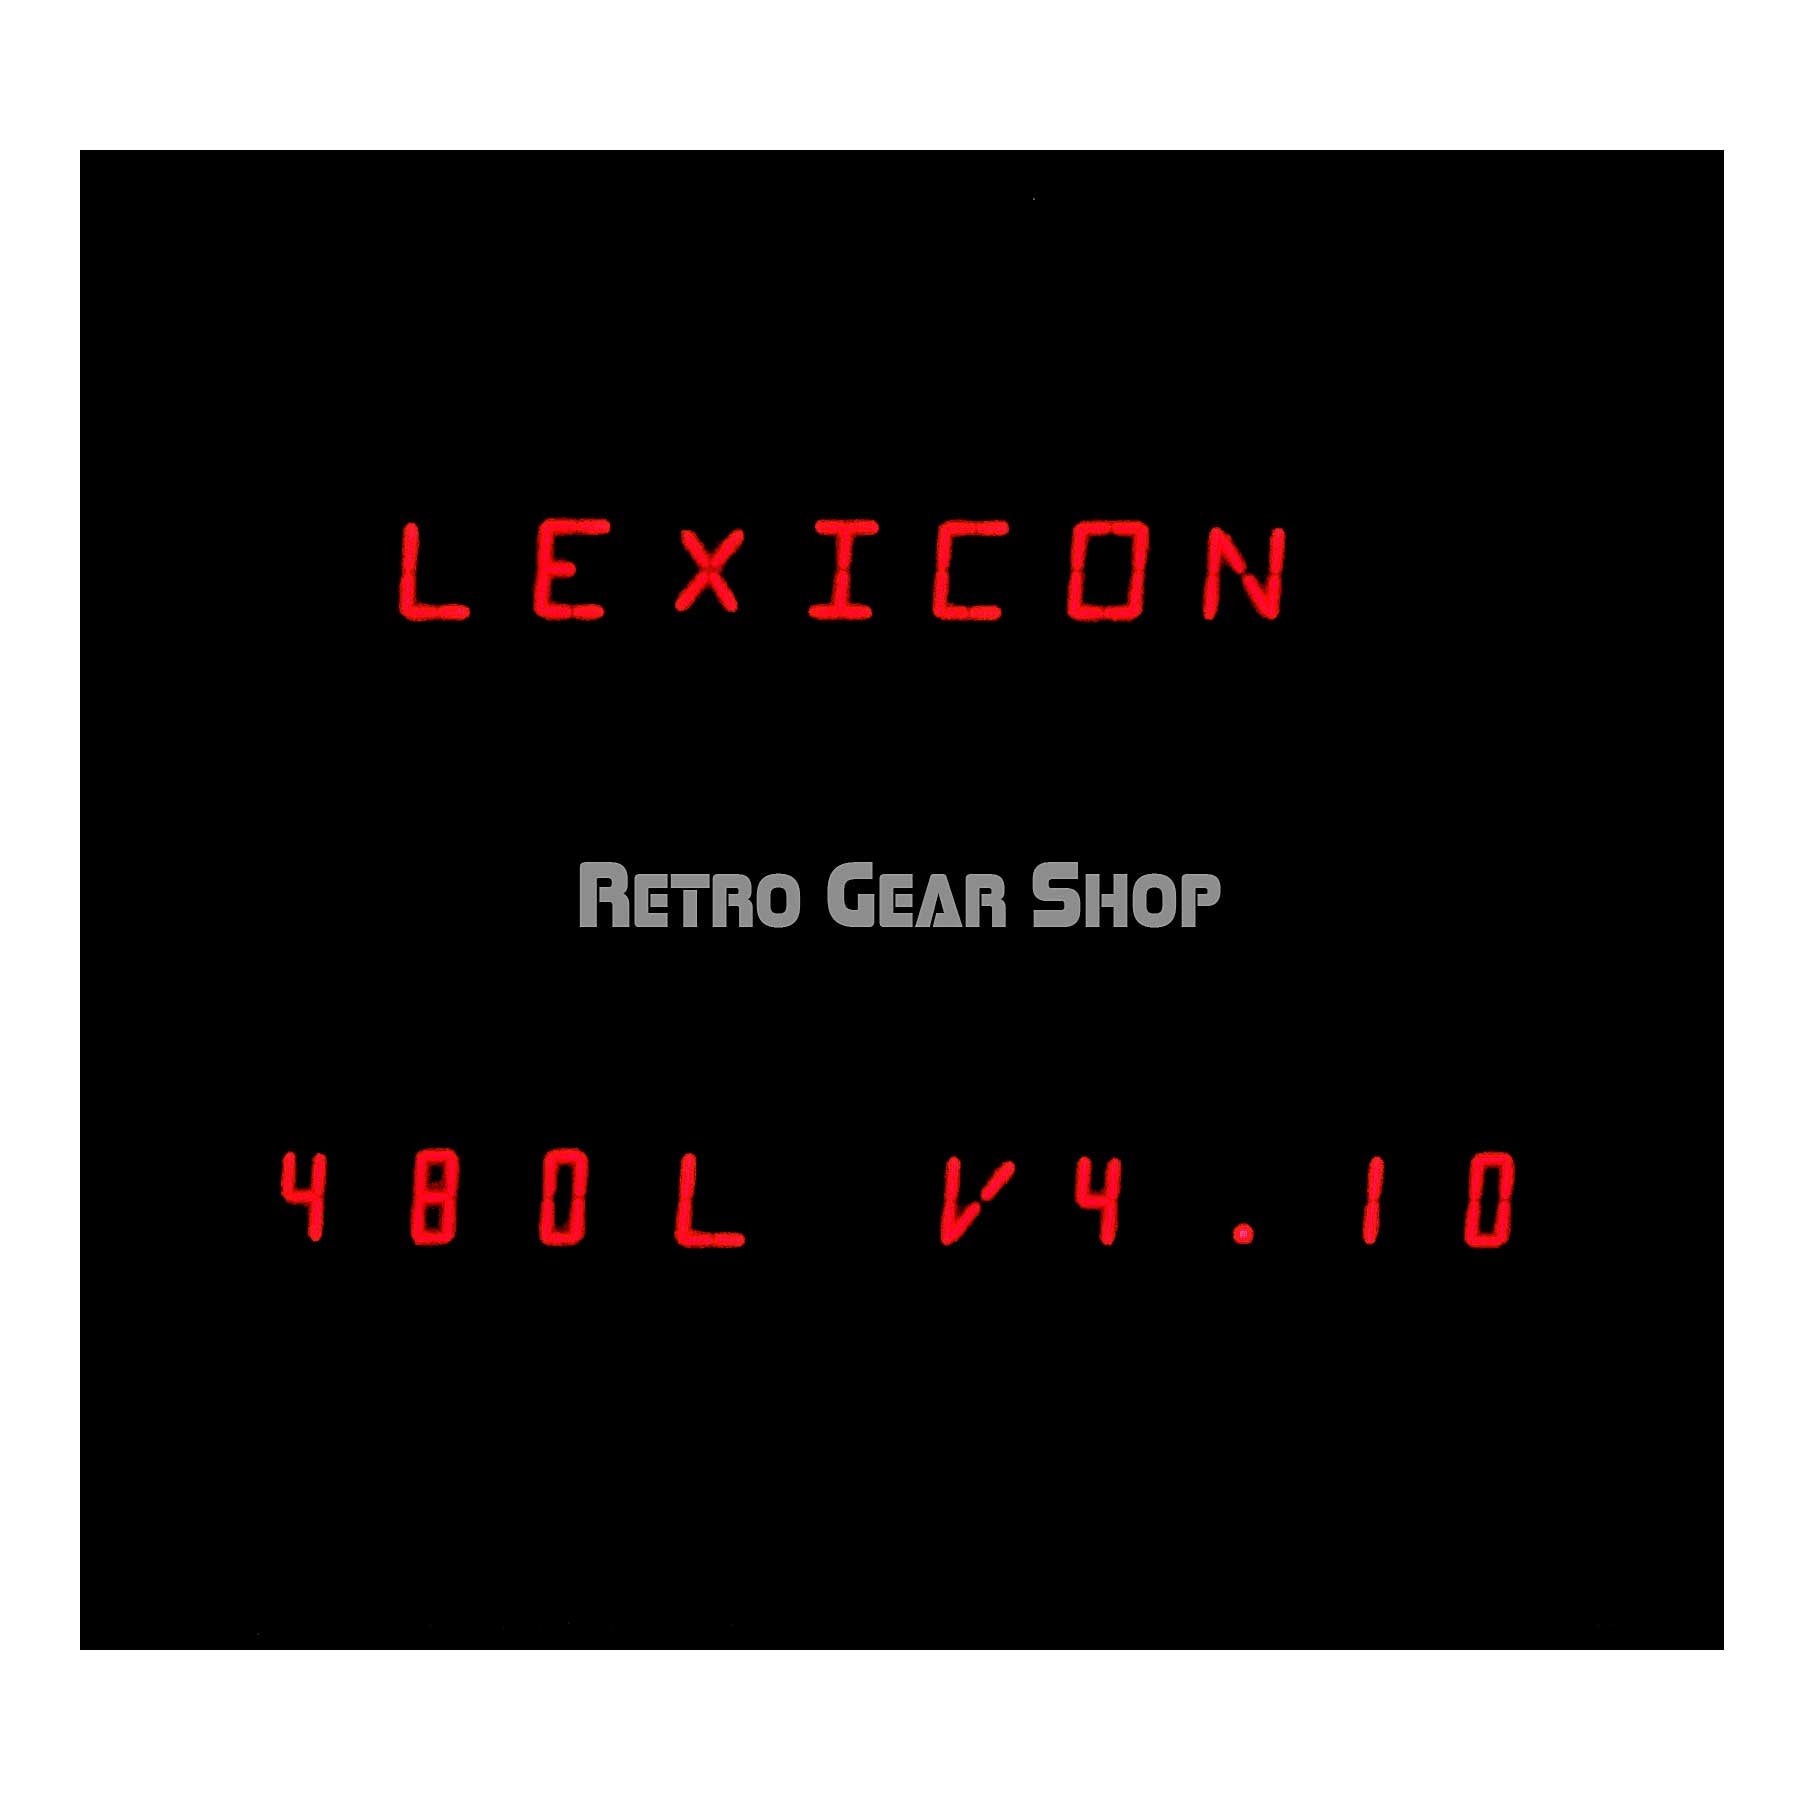 Lexicon 480L V4.10 + Sampling Card LED Screen